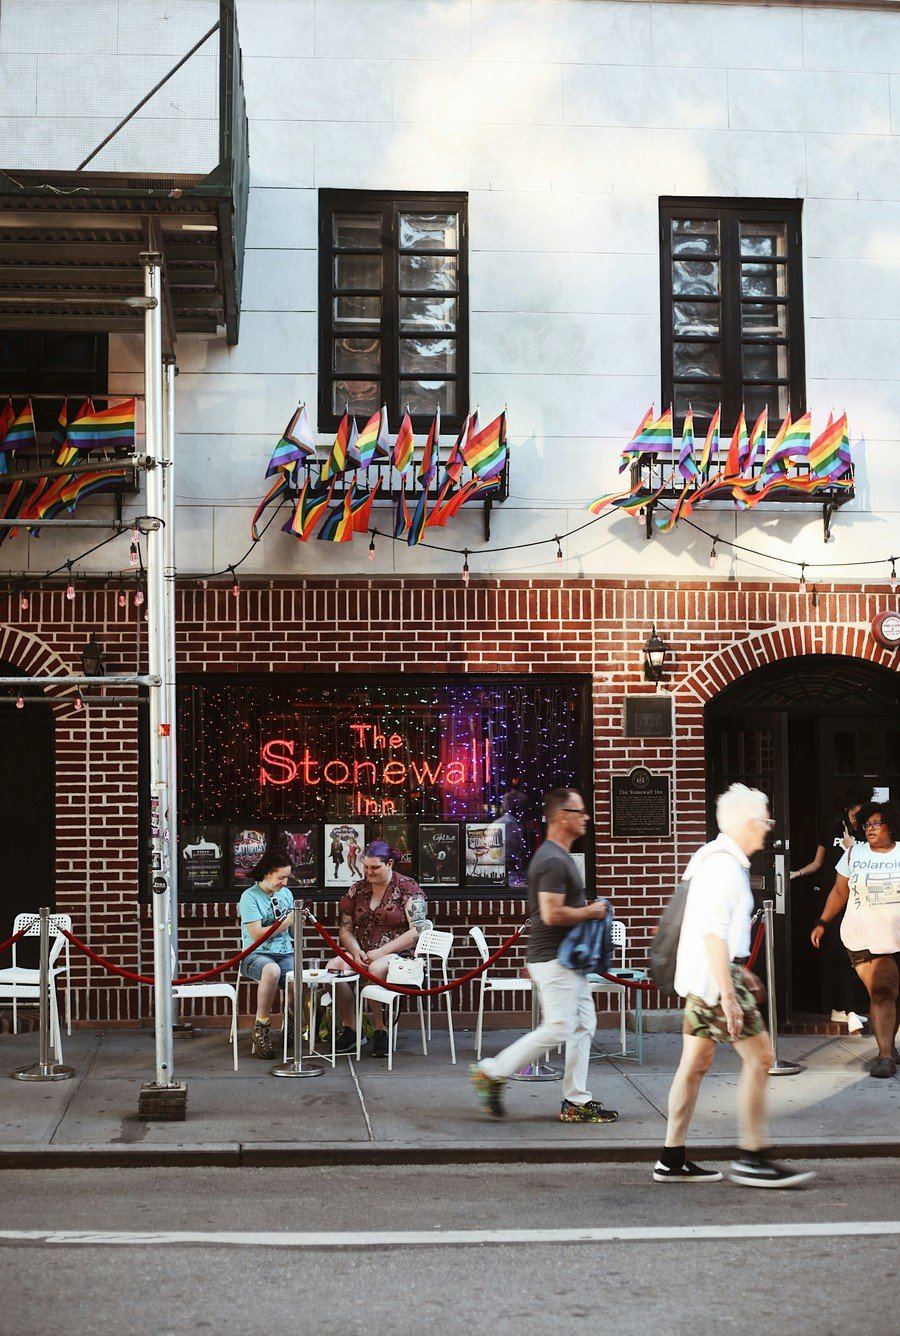 Stonewall Inn, photo by Karly Jones in Unsplash